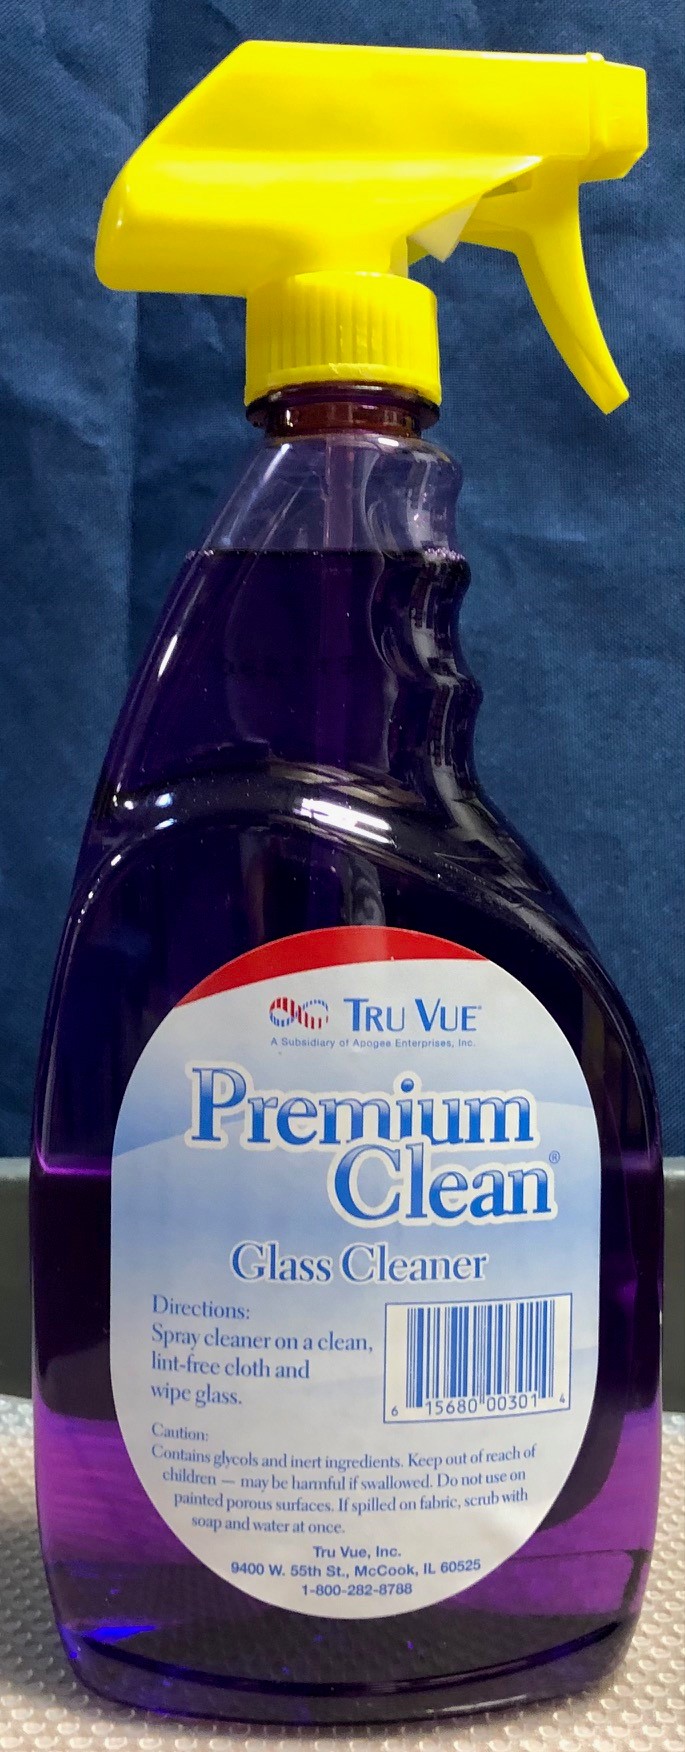 Premium Clean Glass Cleaner, 26 oz. bottle